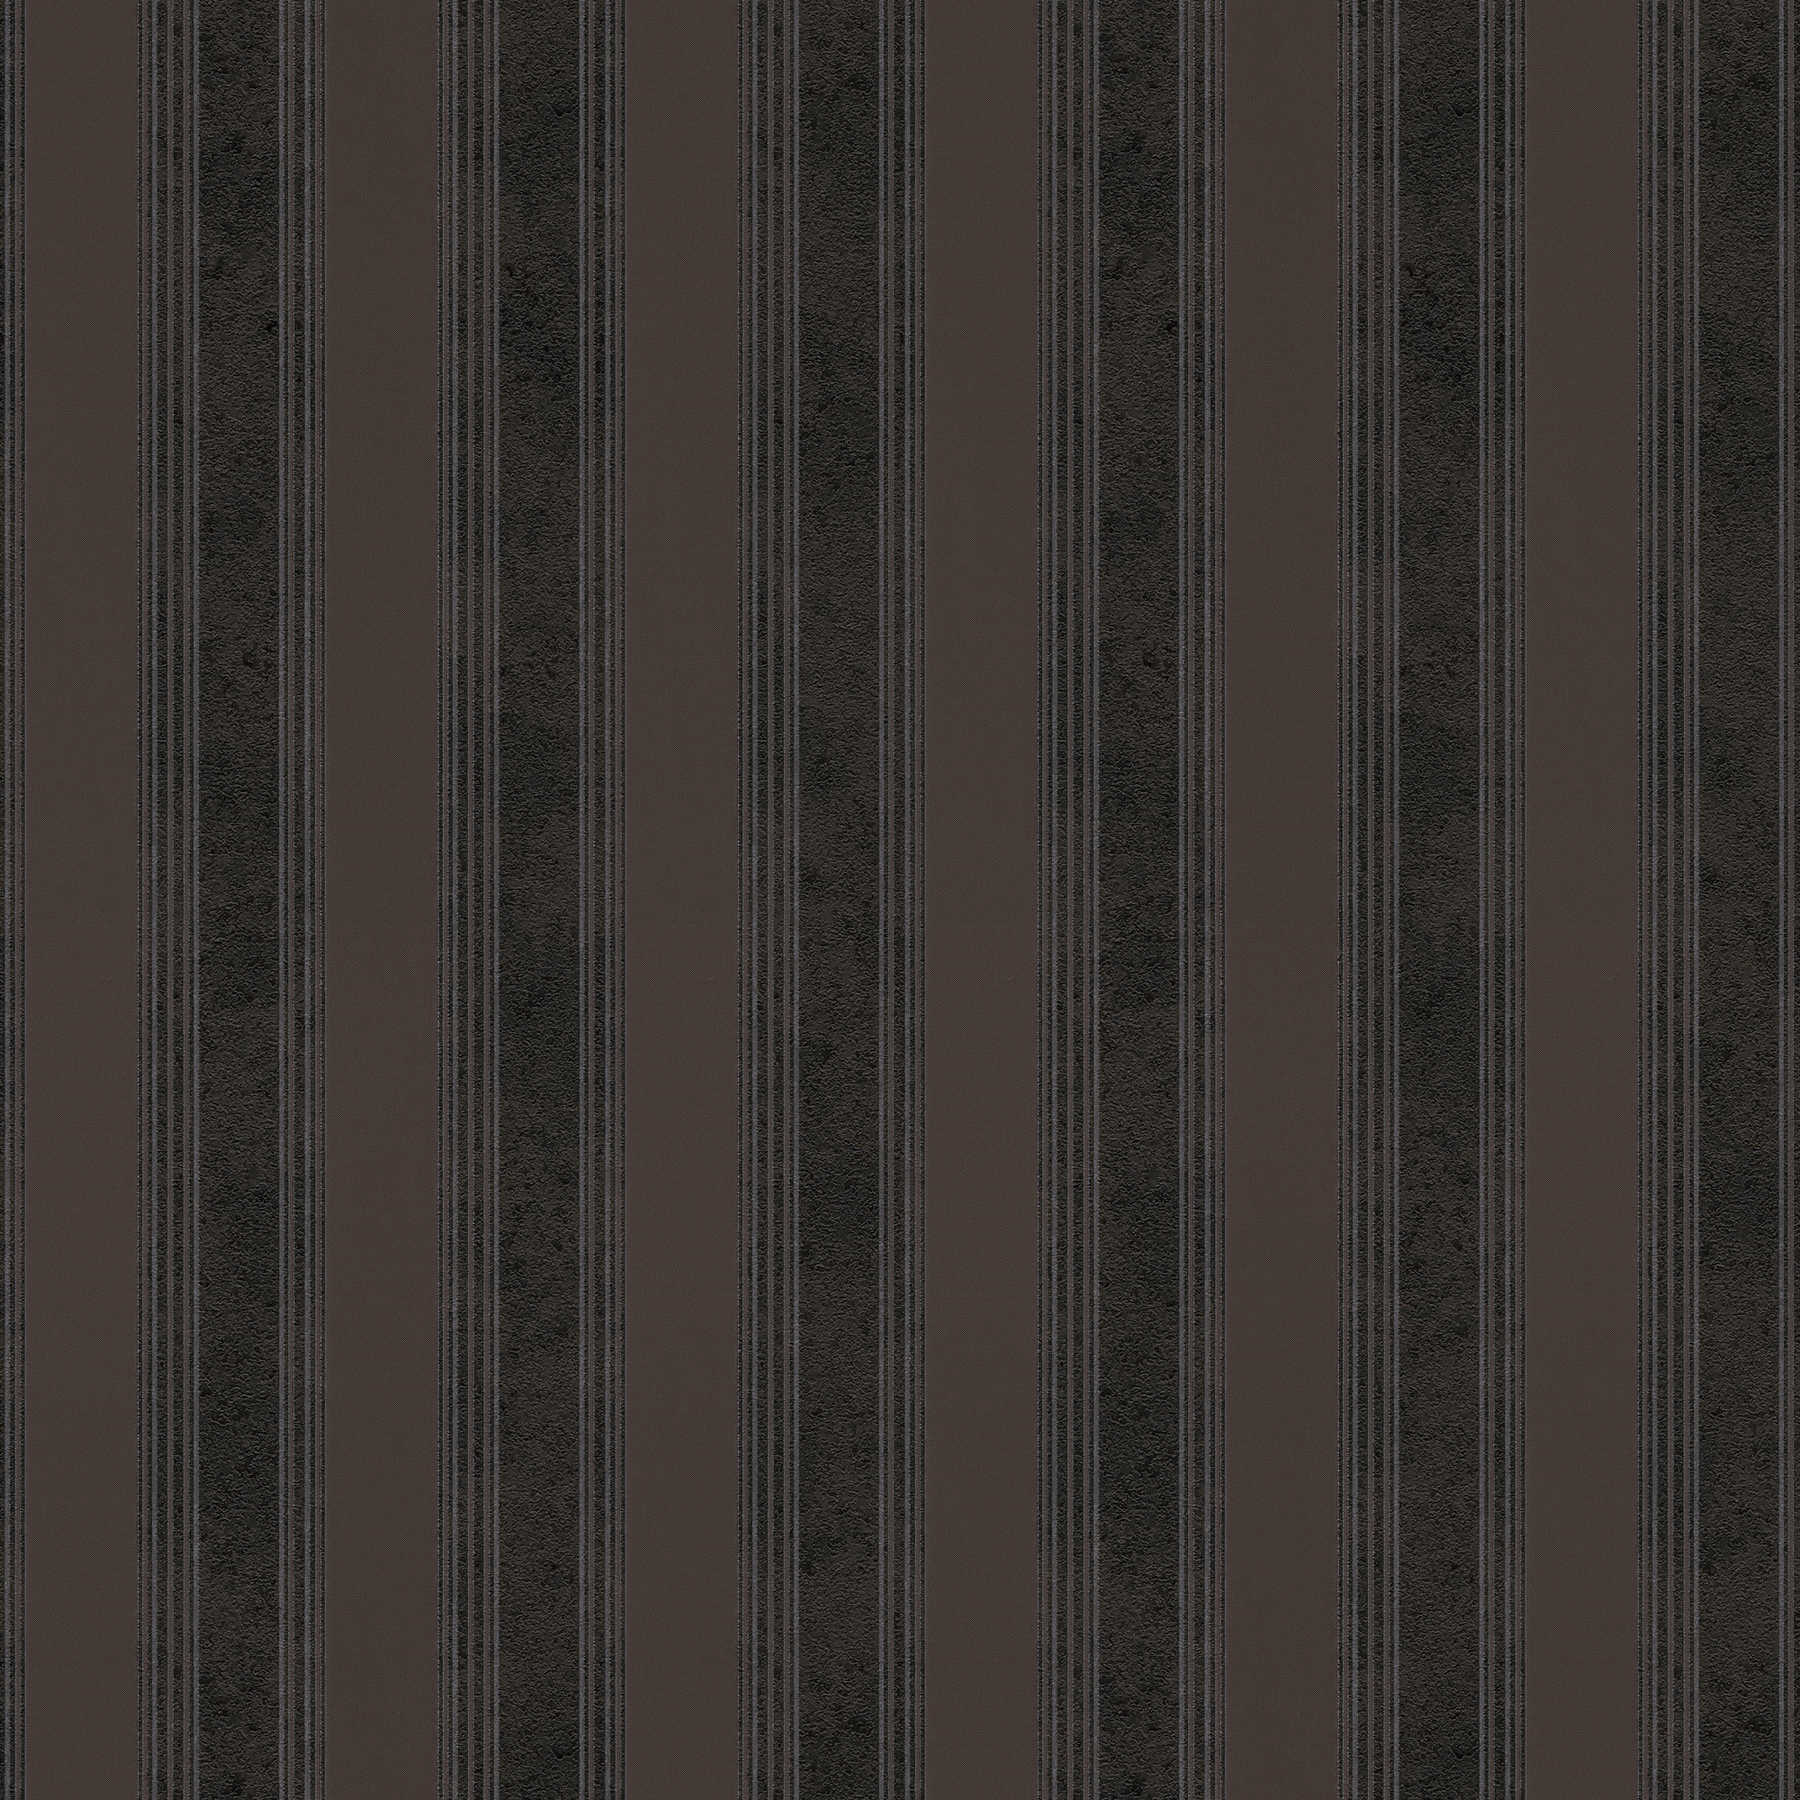 Dark wallpaper stripes pattern with texture effect - brown
